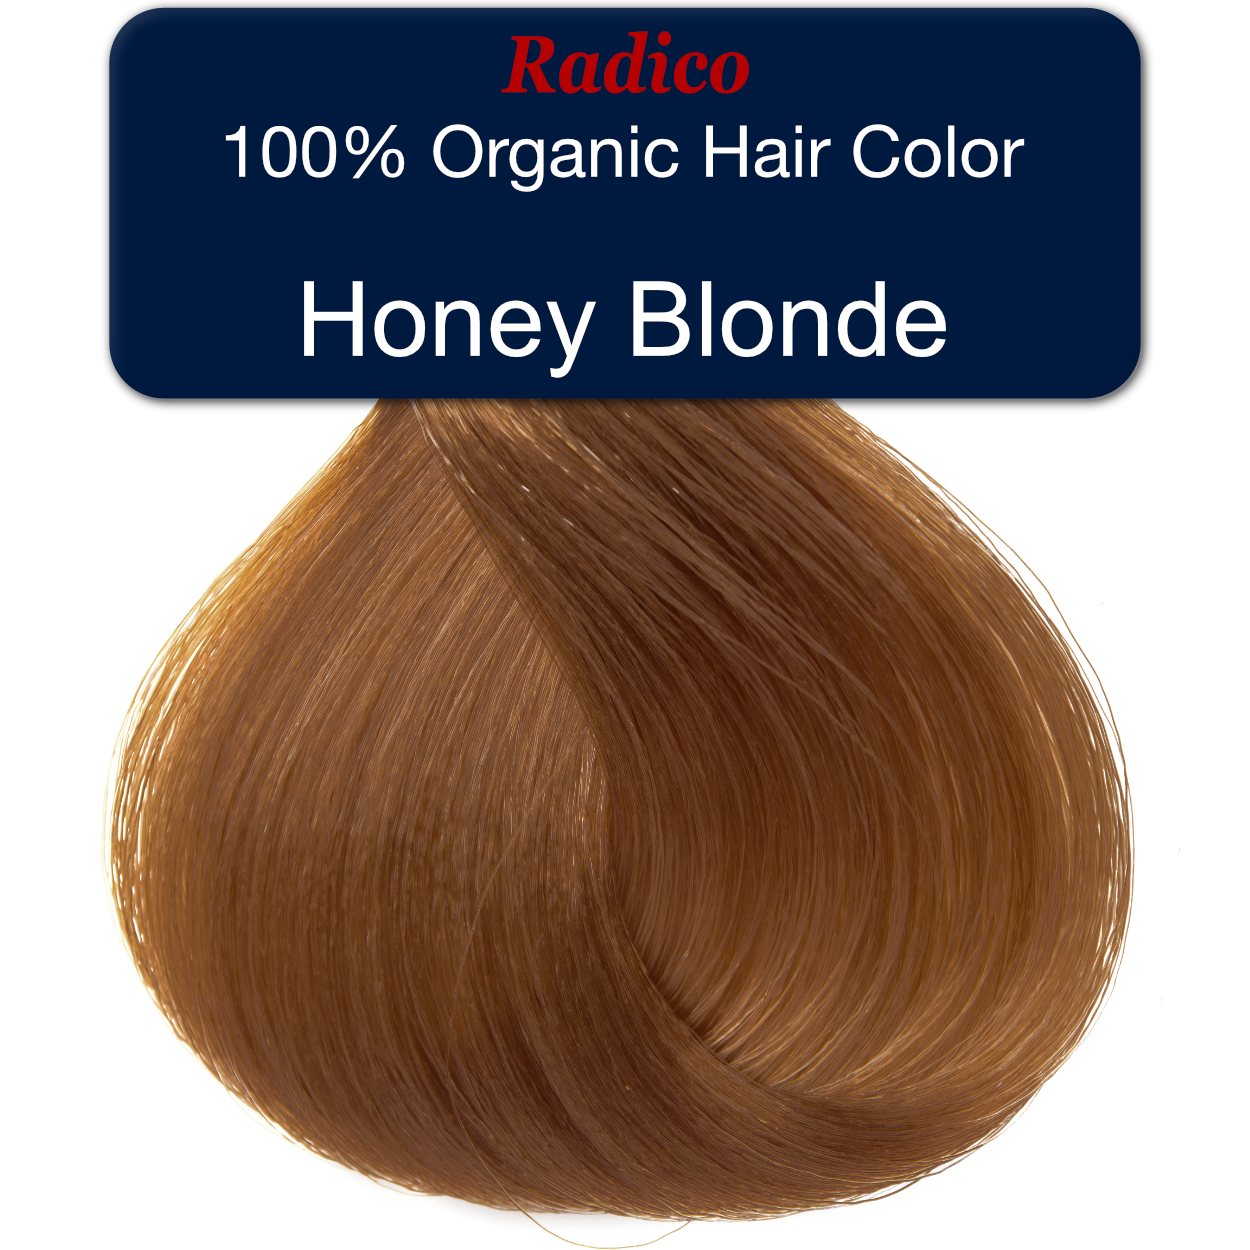 100% organic hair color. Honey blonde hair color sample.